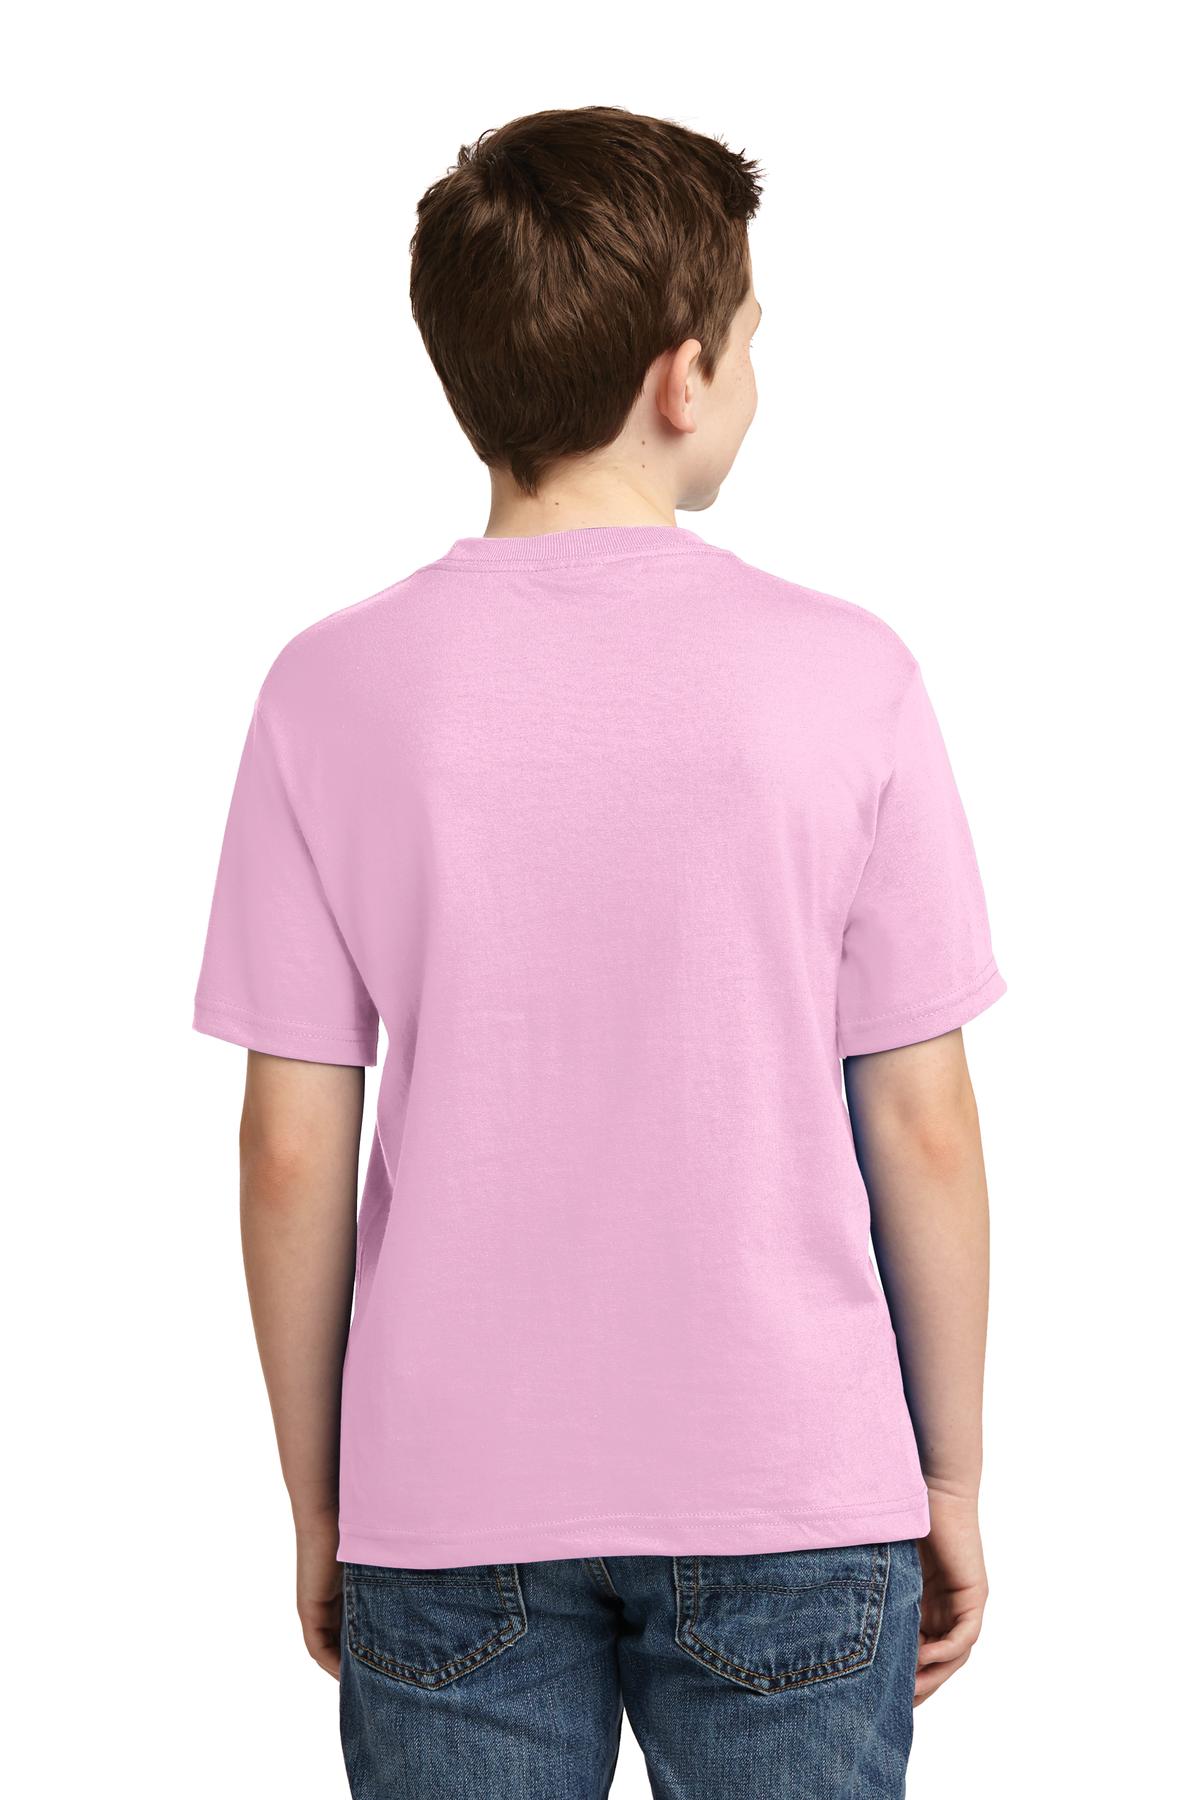 JERZEES® - Youth Dri-Power® 50/50 Cotton/Poly T-Shirt. 29B [Classic Pink] - DFW Impression